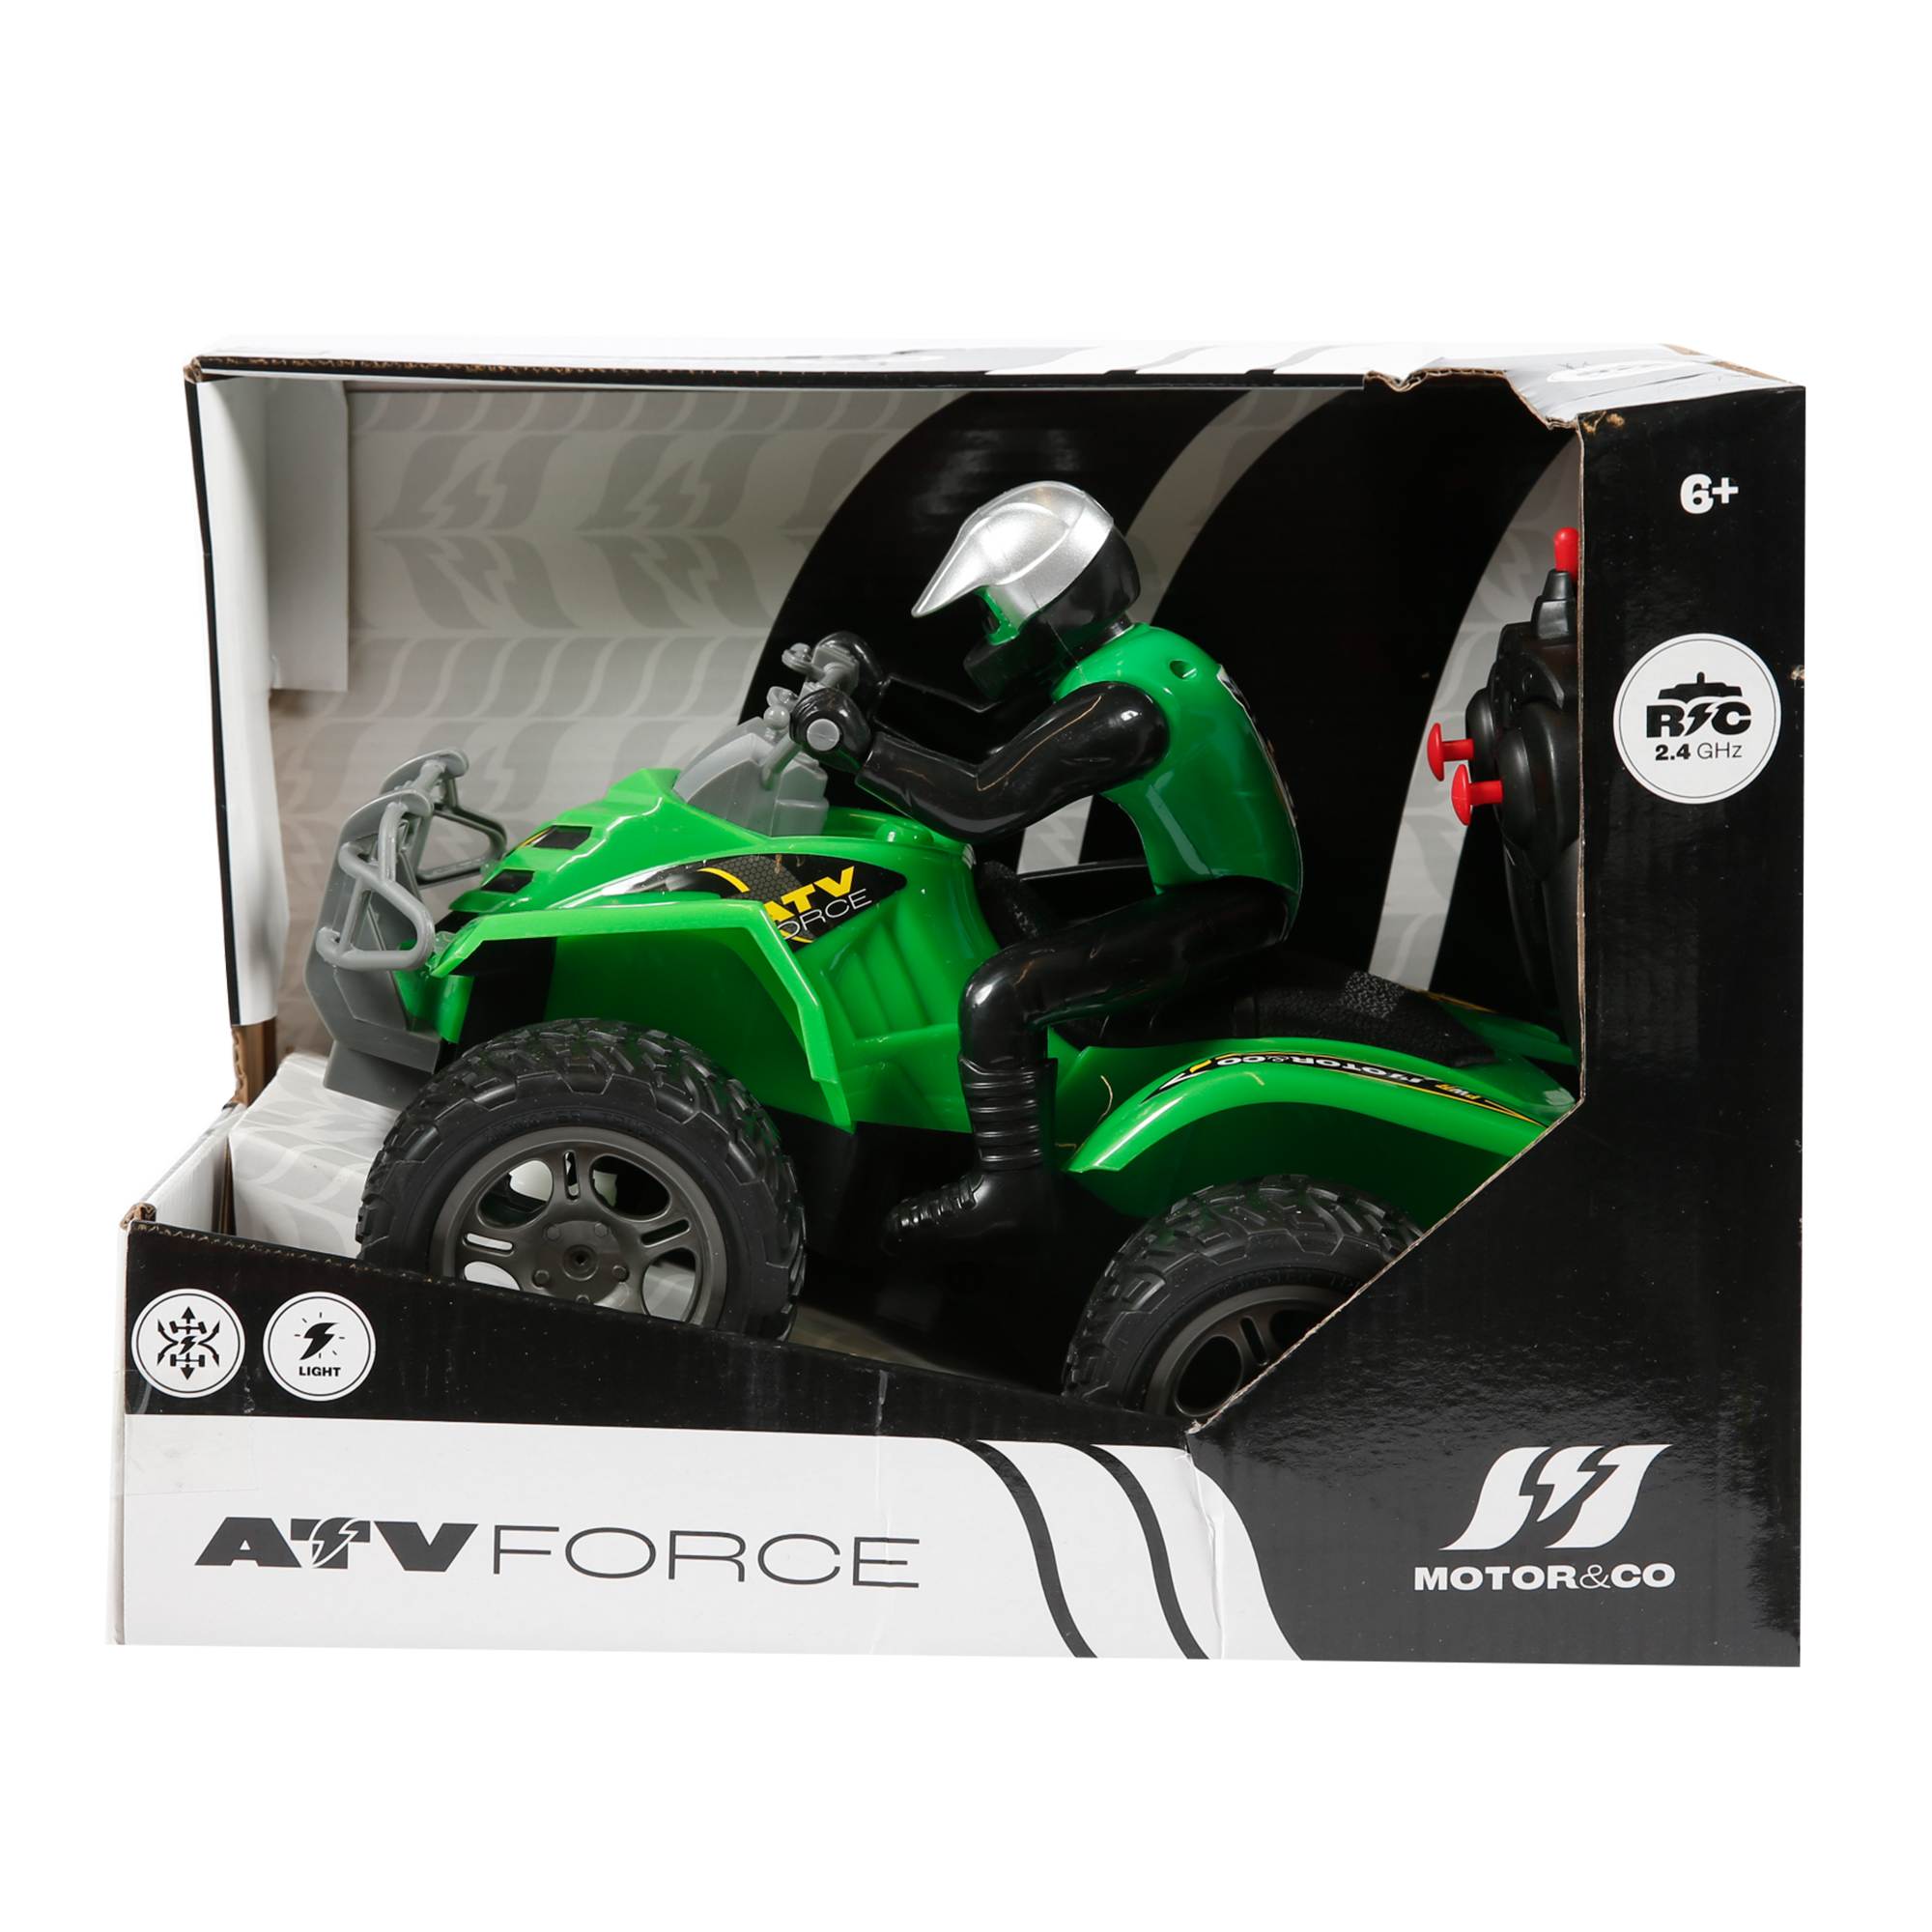 Atv force - MOTOR & CO.